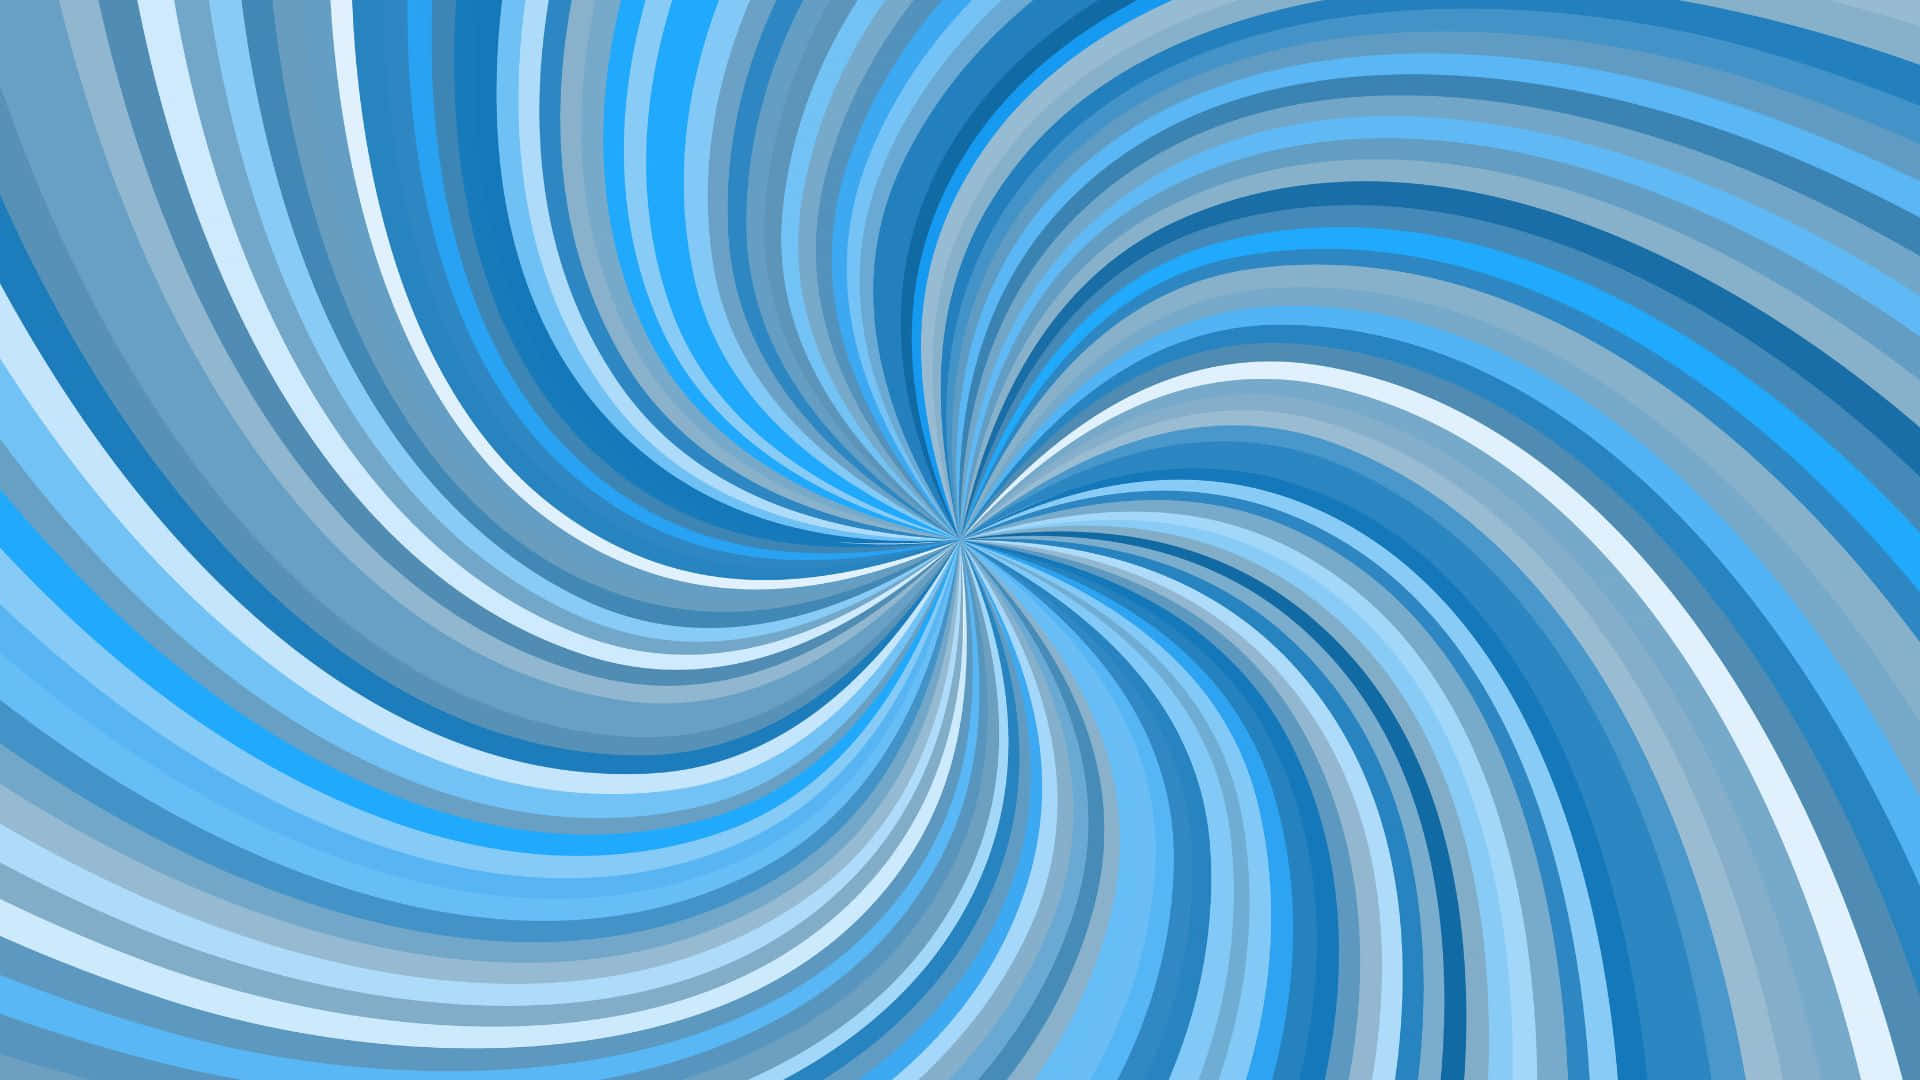 A spiraling pattern of blues.